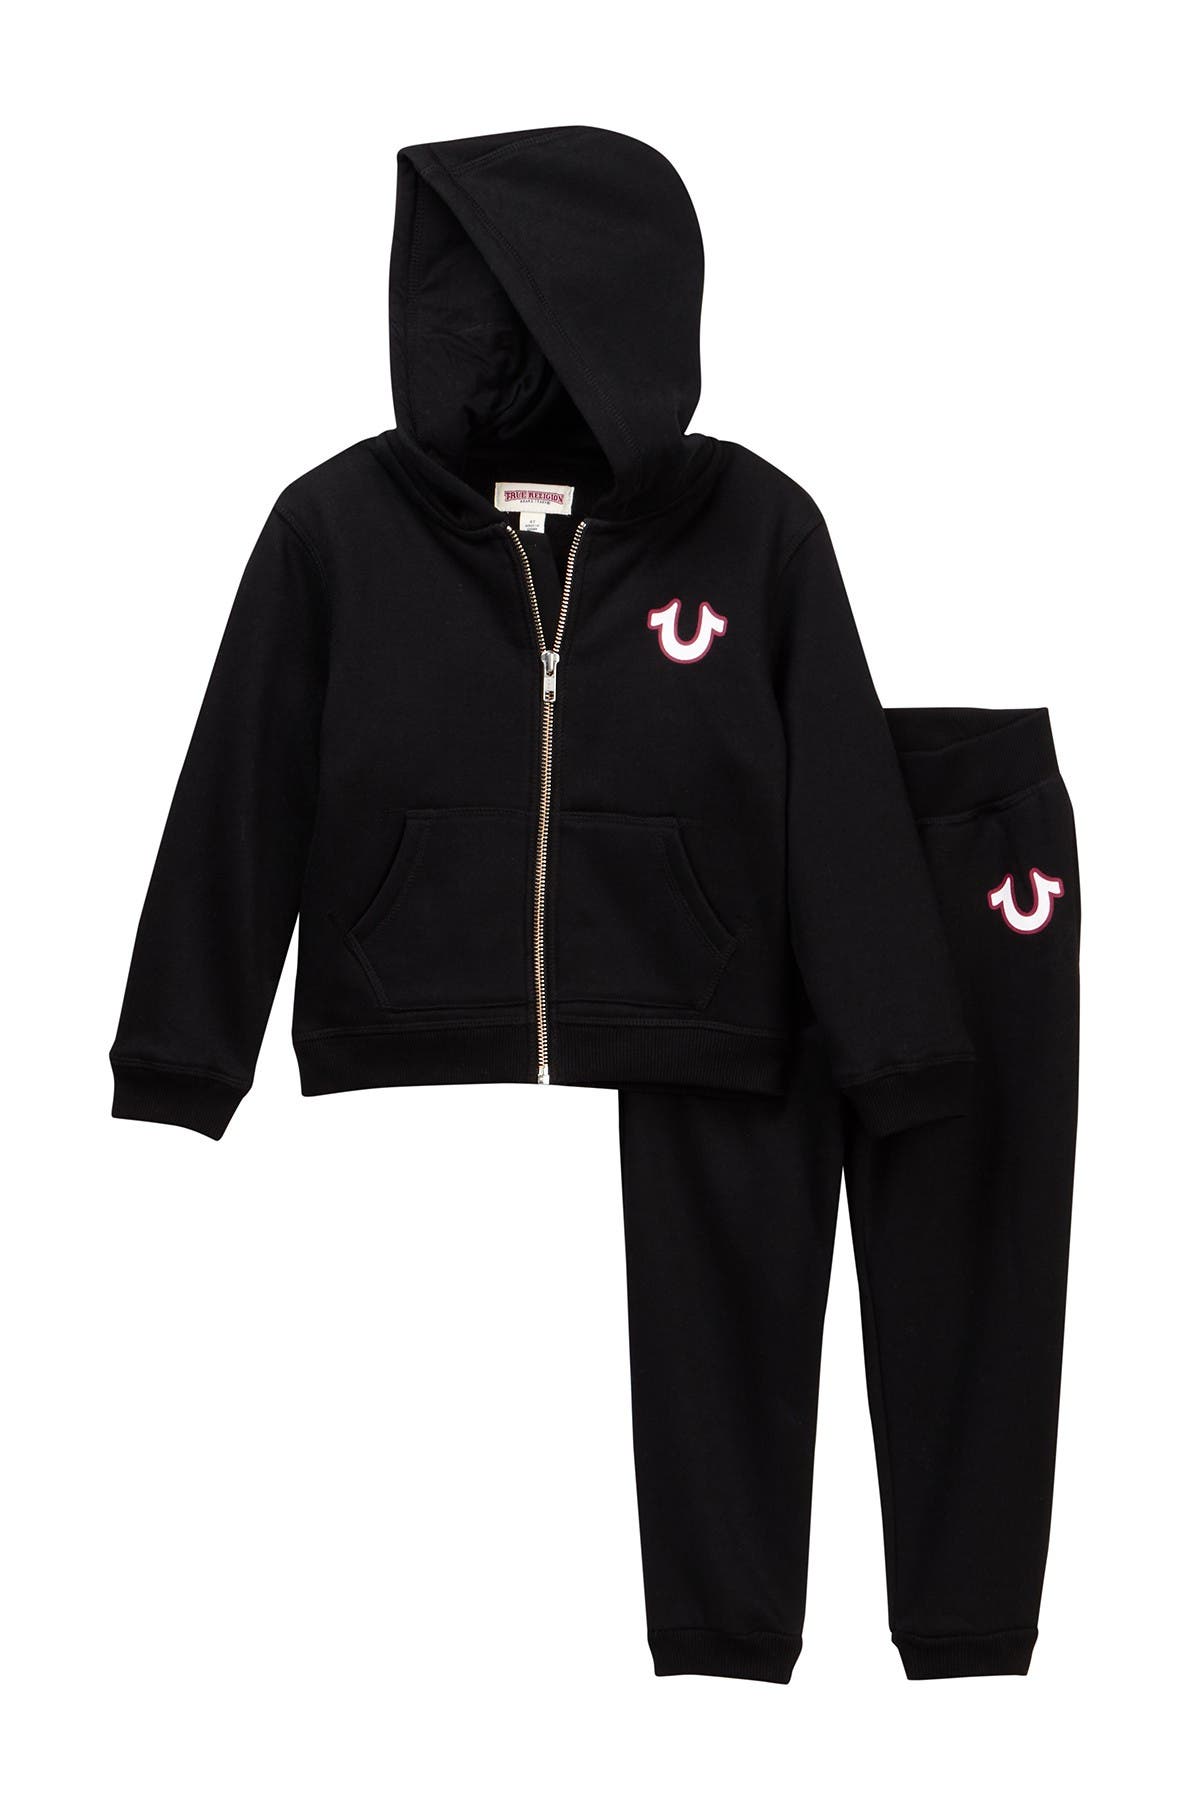 true religion hoodie and sweatpants set